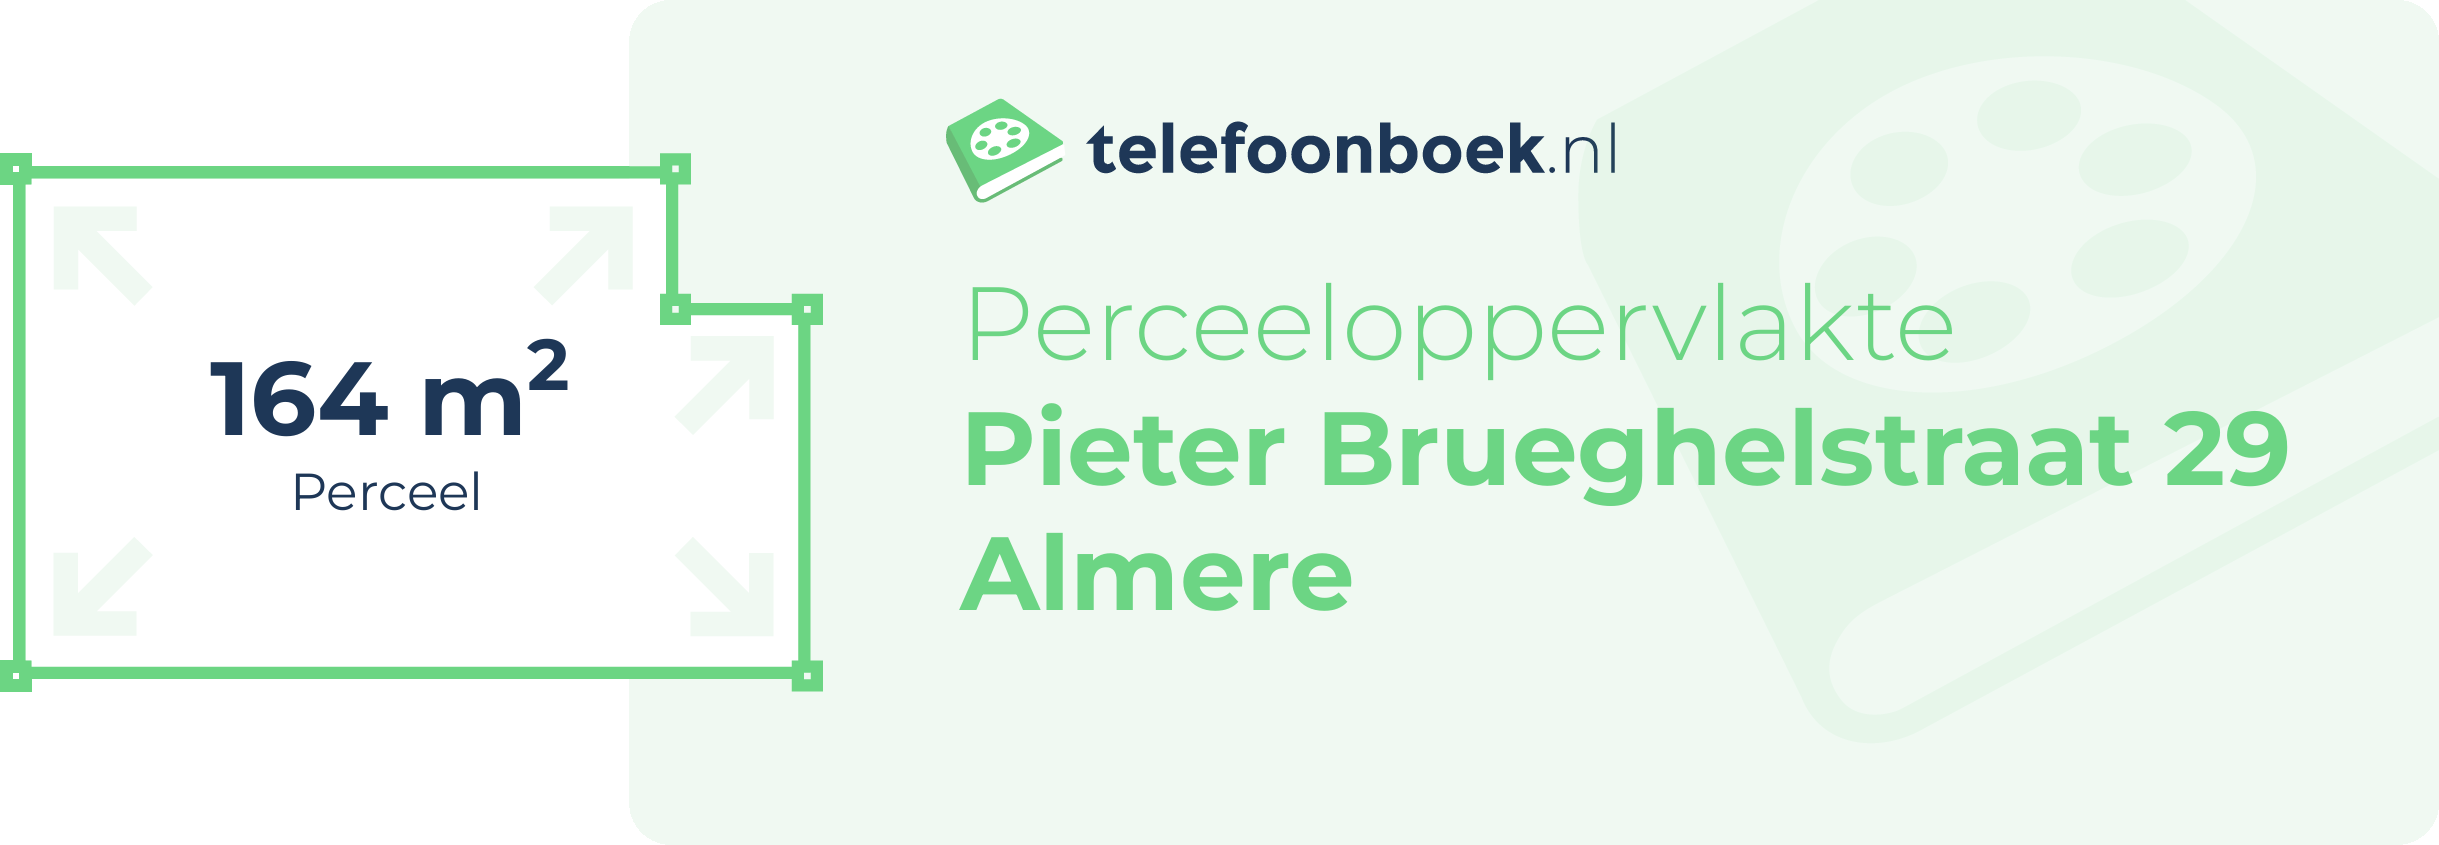 Perceeloppervlakte Pieter Brueghelstraat 29 Almere